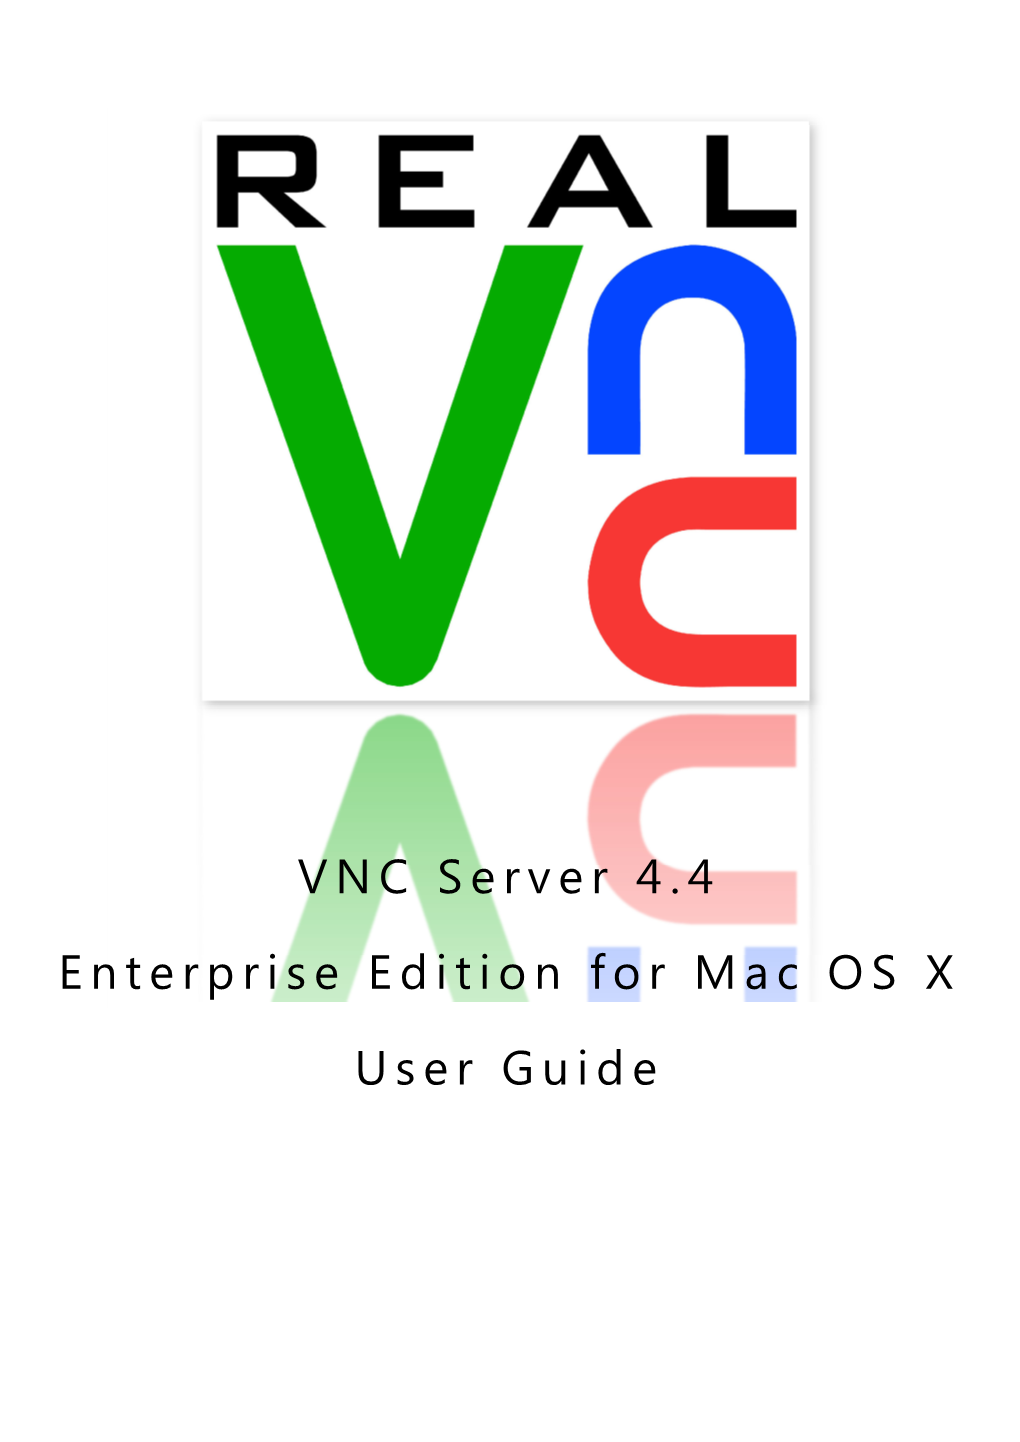 VNC Server 4.4 Enterprise Edition for Mac OS X User Guide